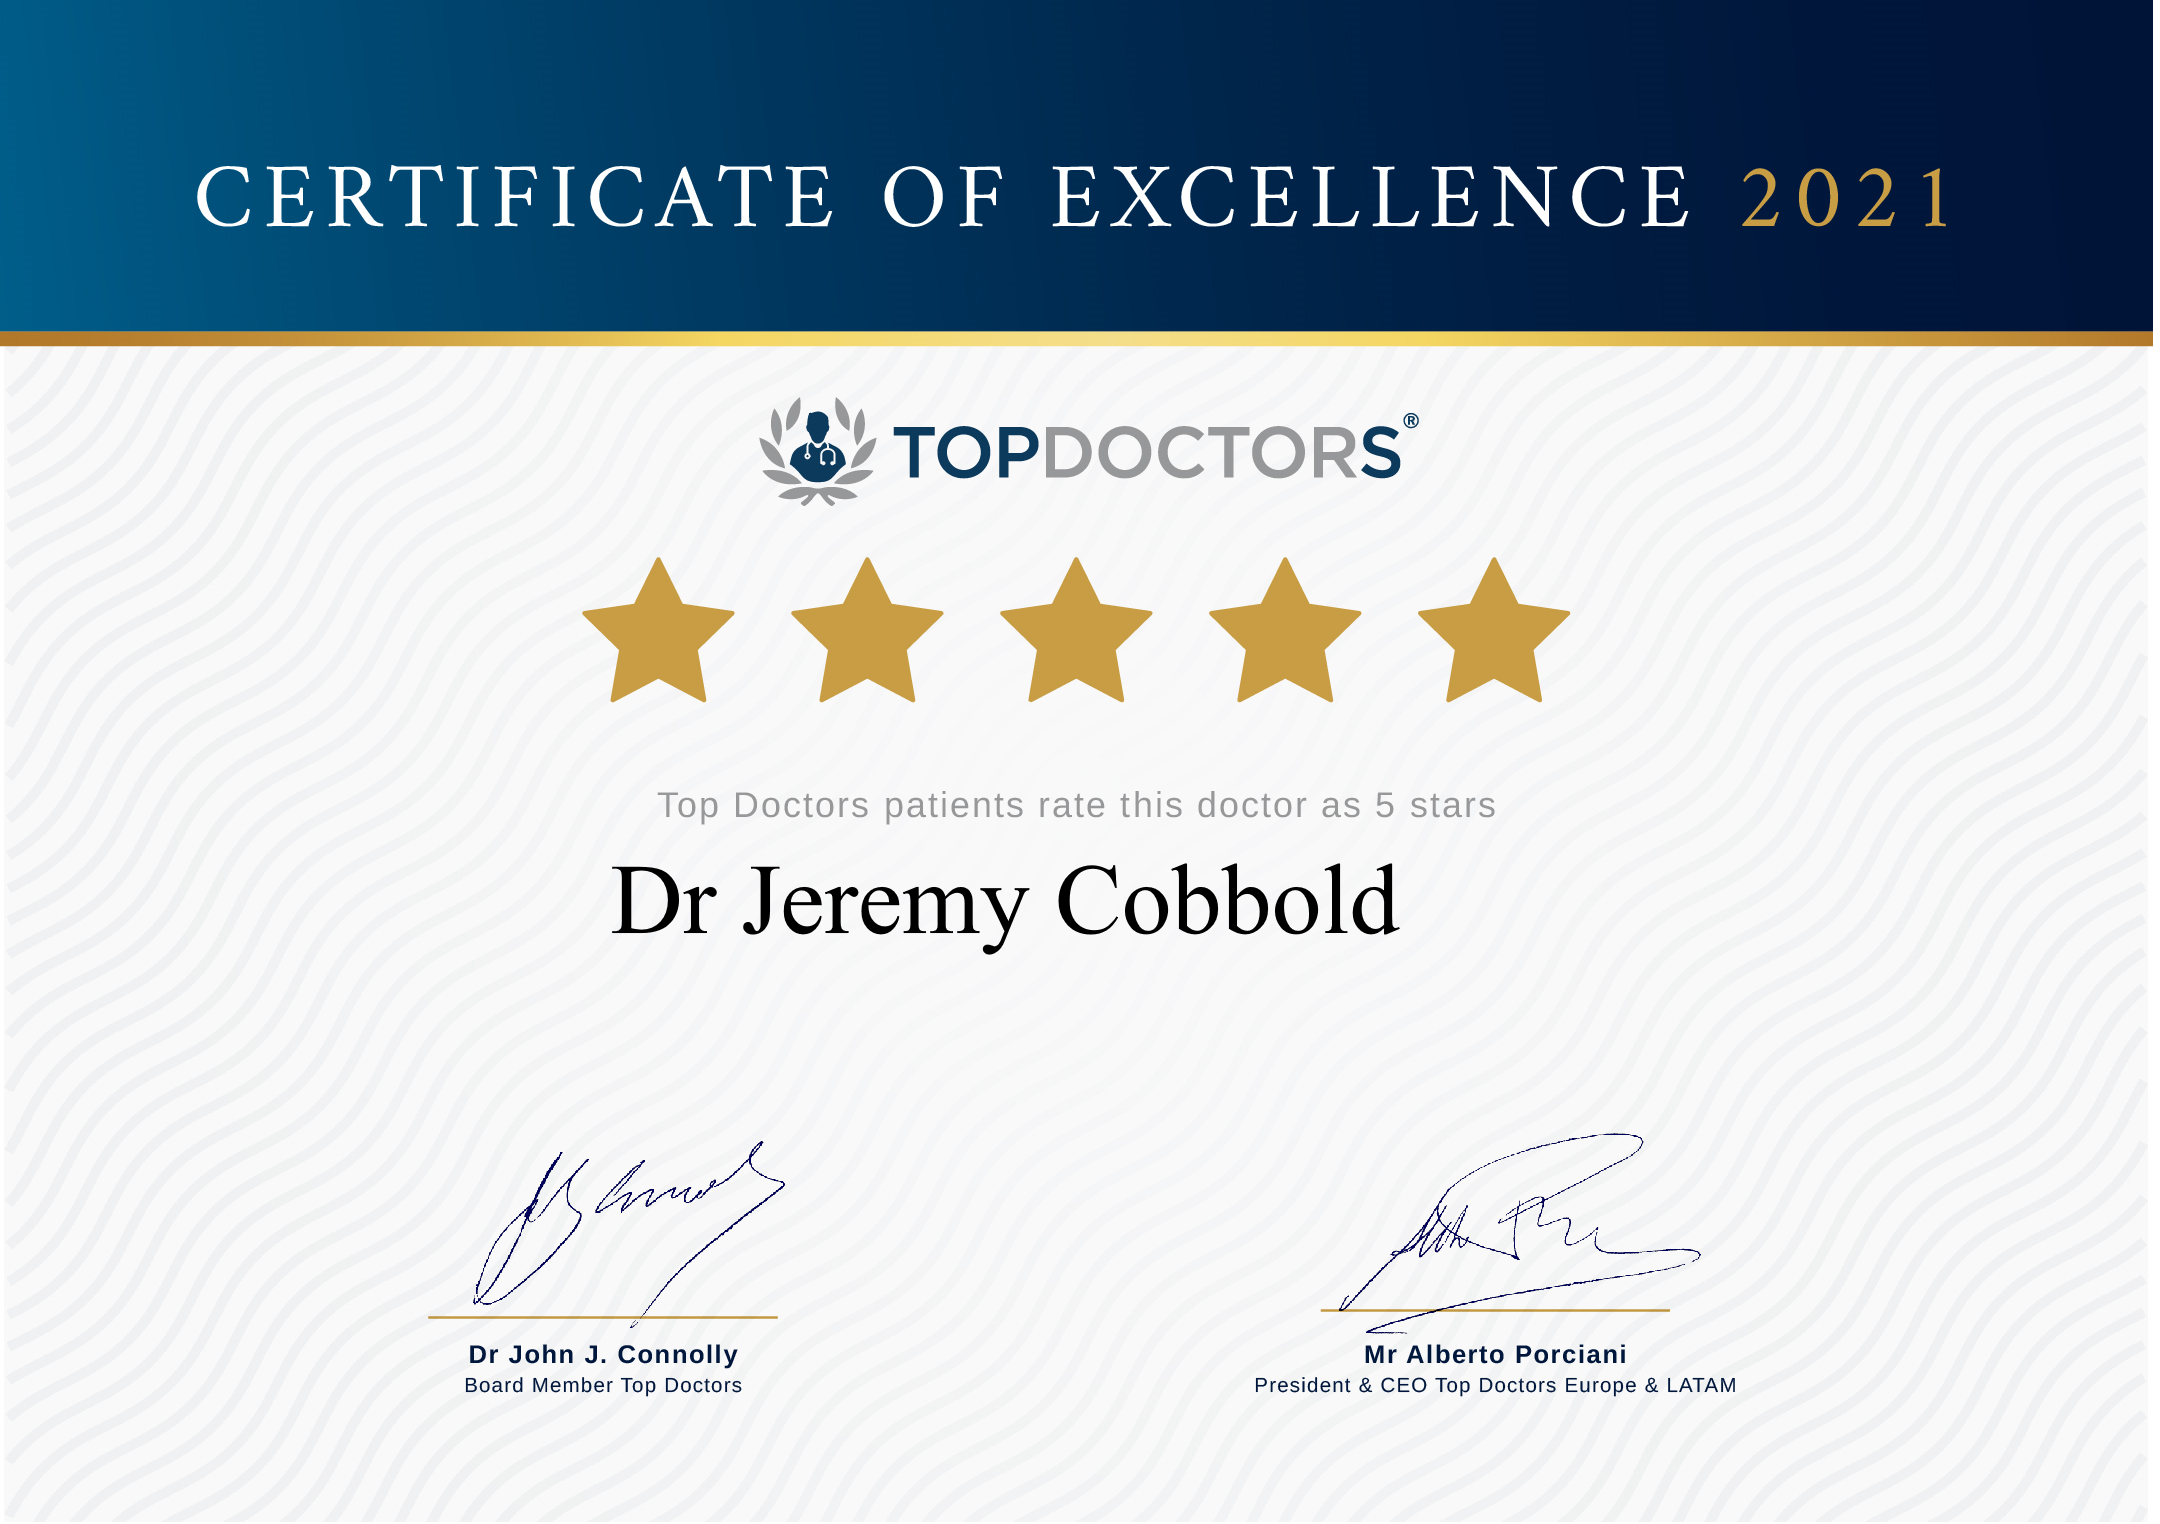 Top Doctors Certificate of Excellence 2021